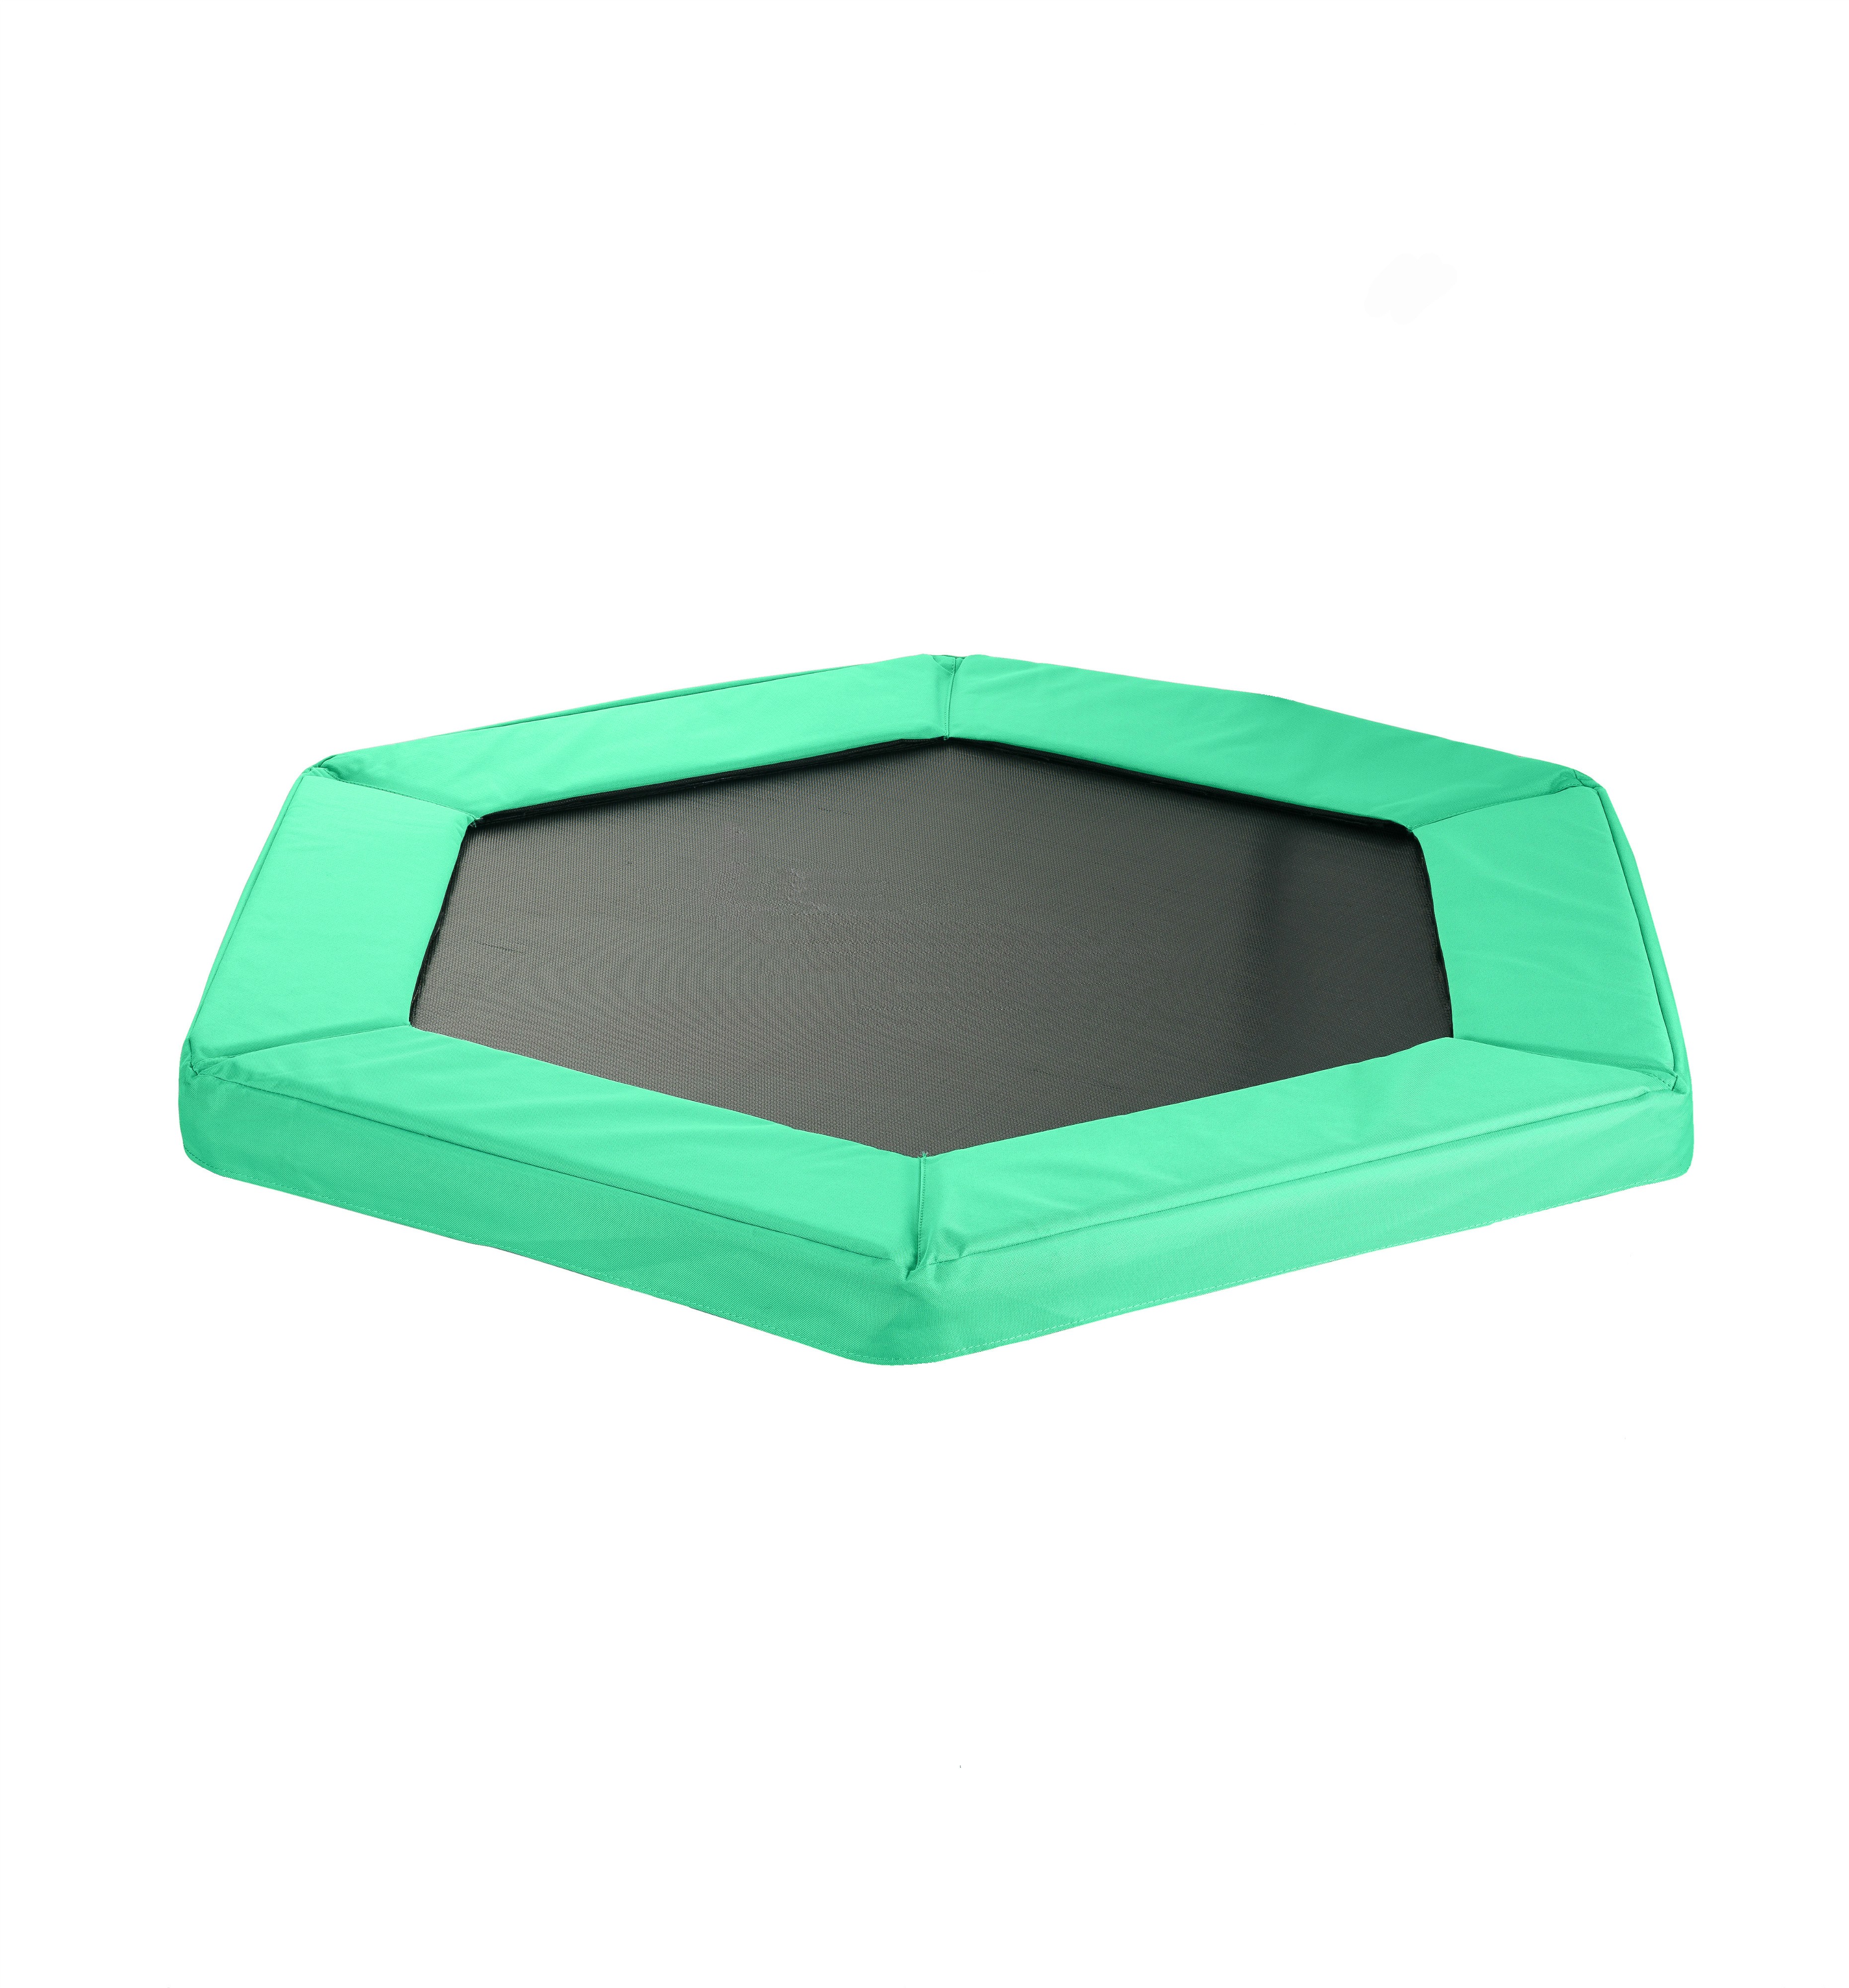 Safety Pad for 127cm 50" Hexagonal Rebounder Mini Trampoline - Pantone Green Oxford